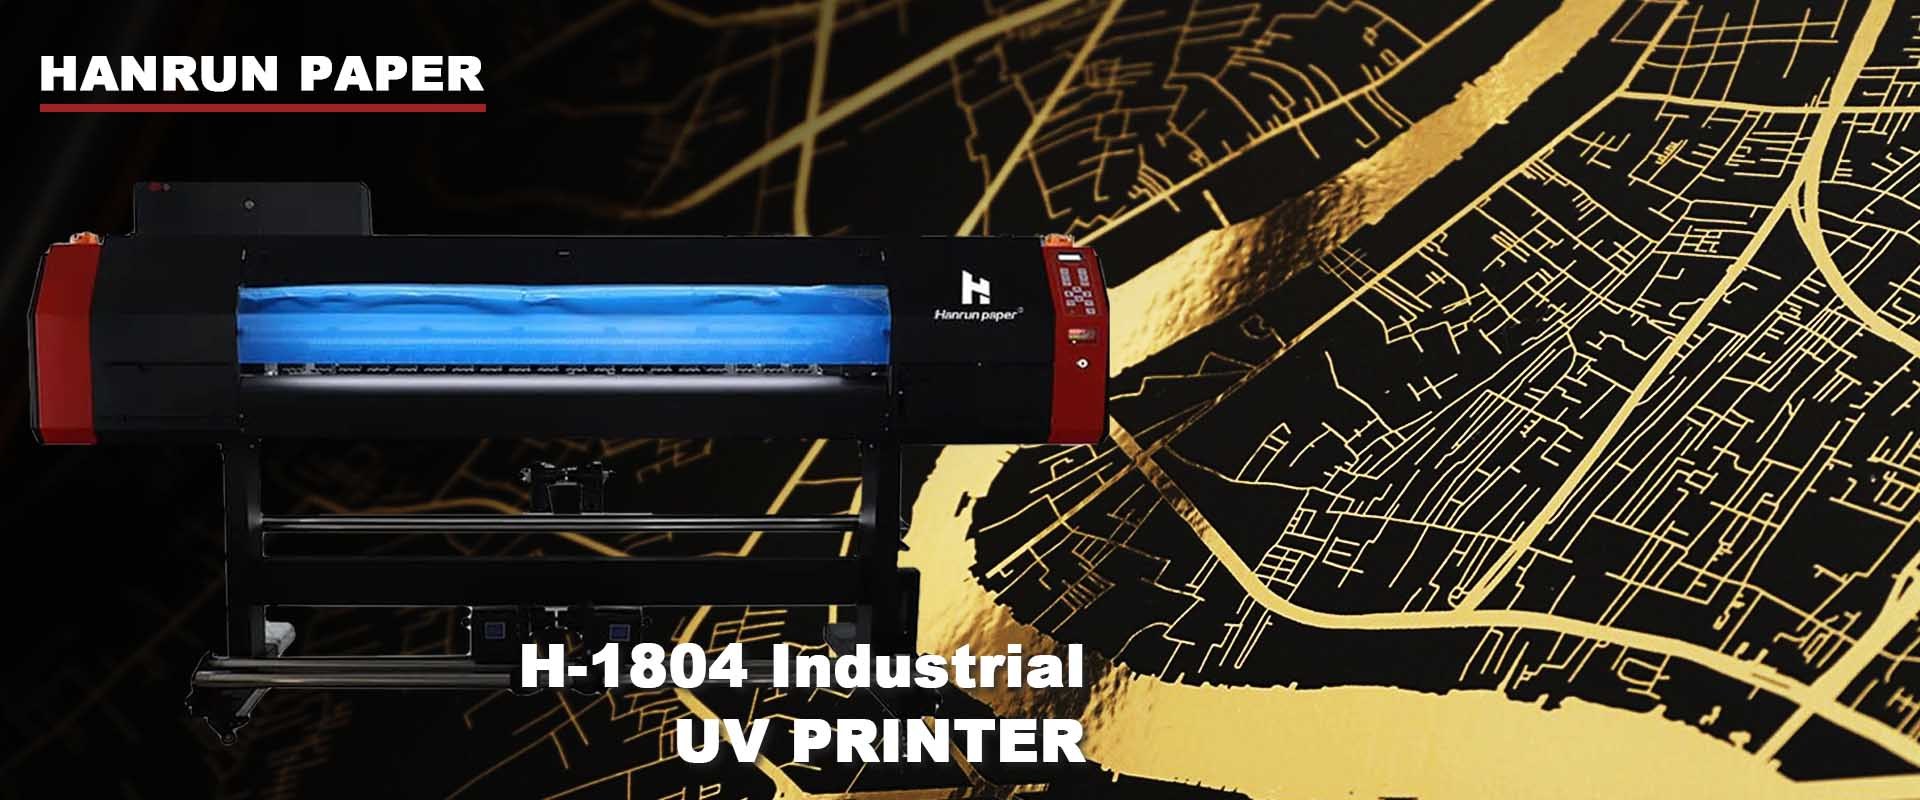 H1804 uv printer hanrun paper